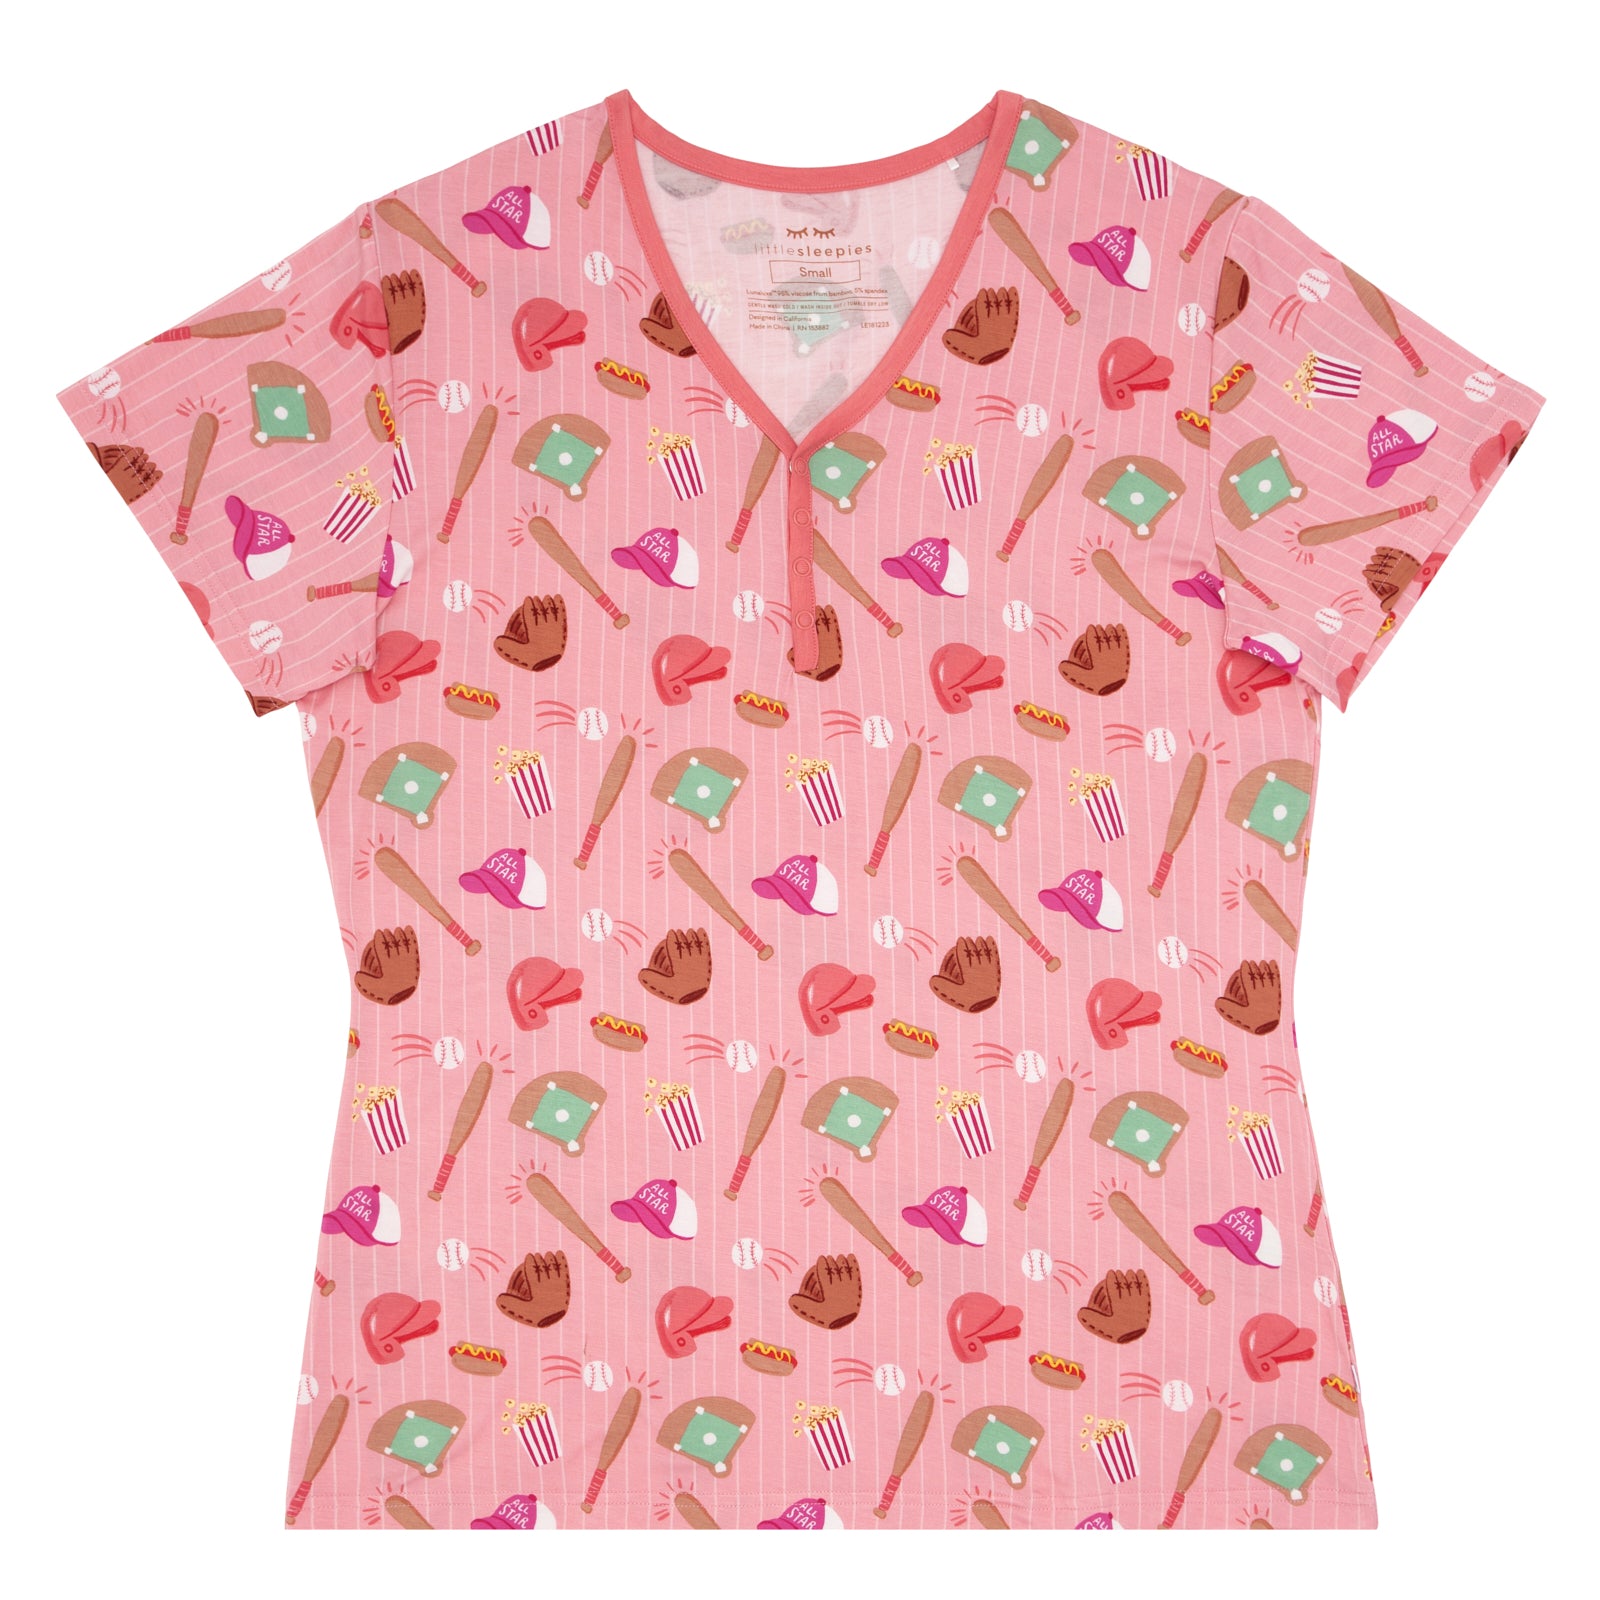 Flat lay image of women's Pink All Stars pajama top